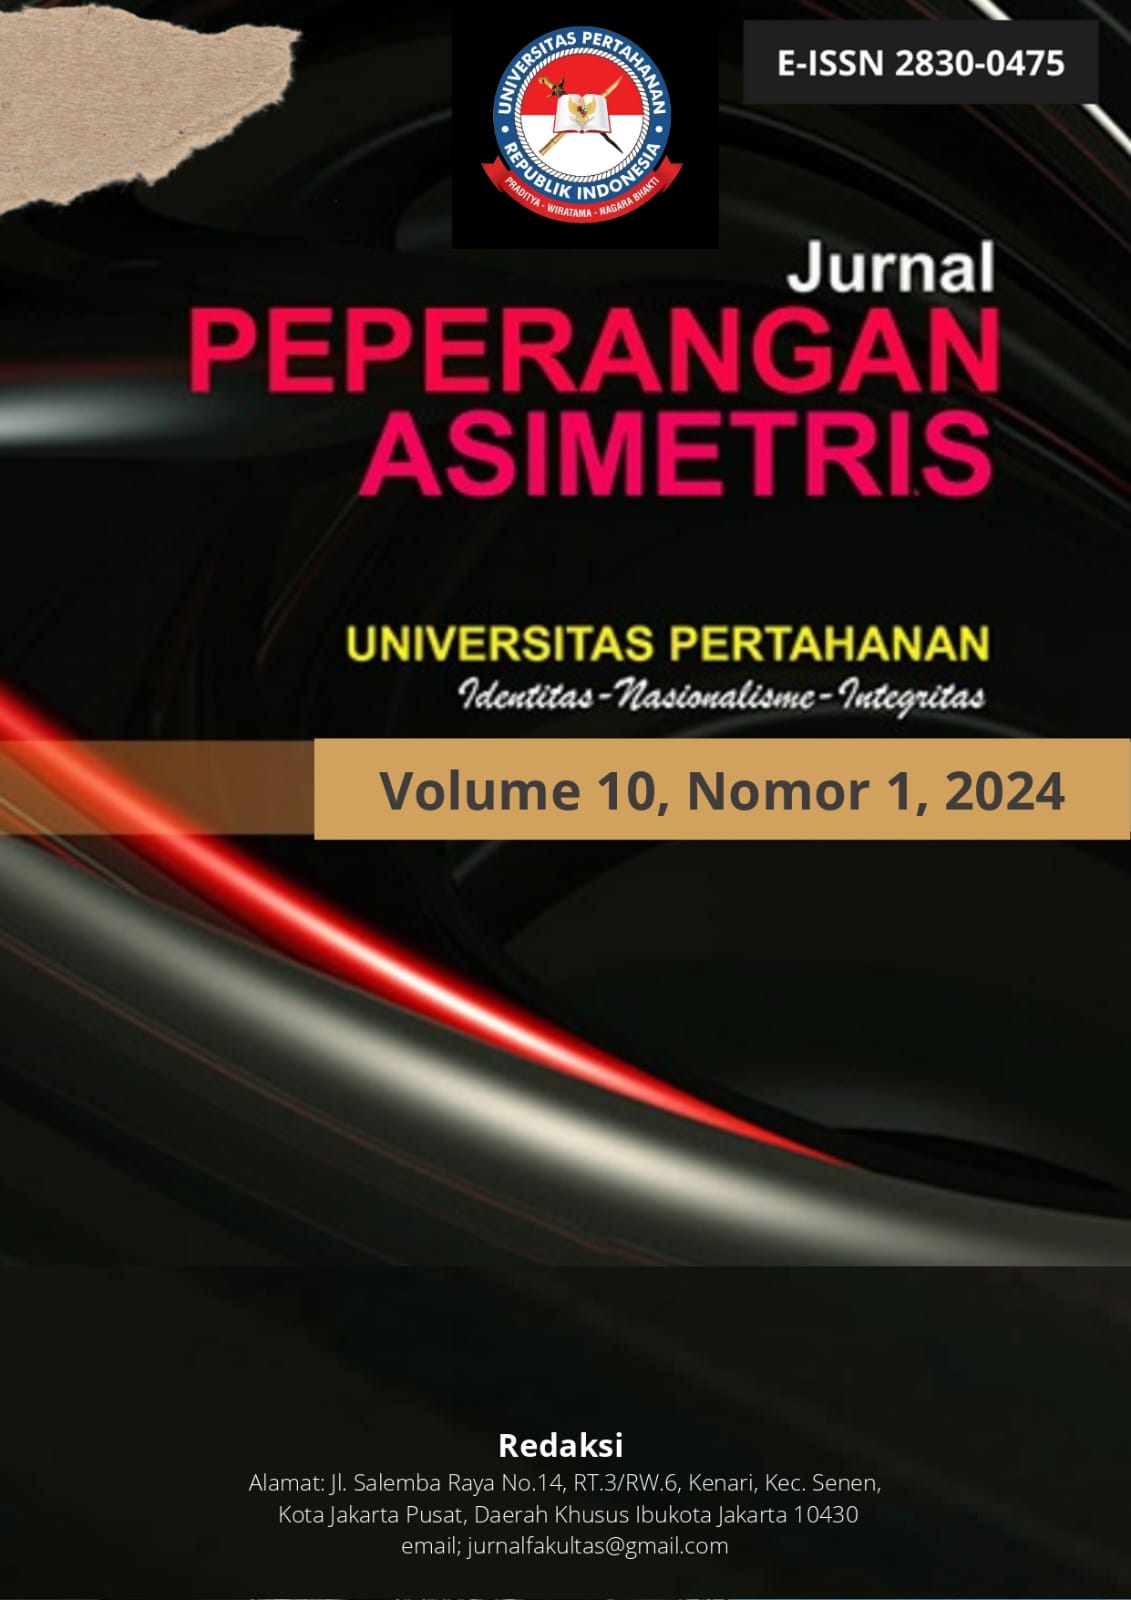 					Lihat Vol 10 No 1 (2024): Jurnal Peperangan Asimetris
				